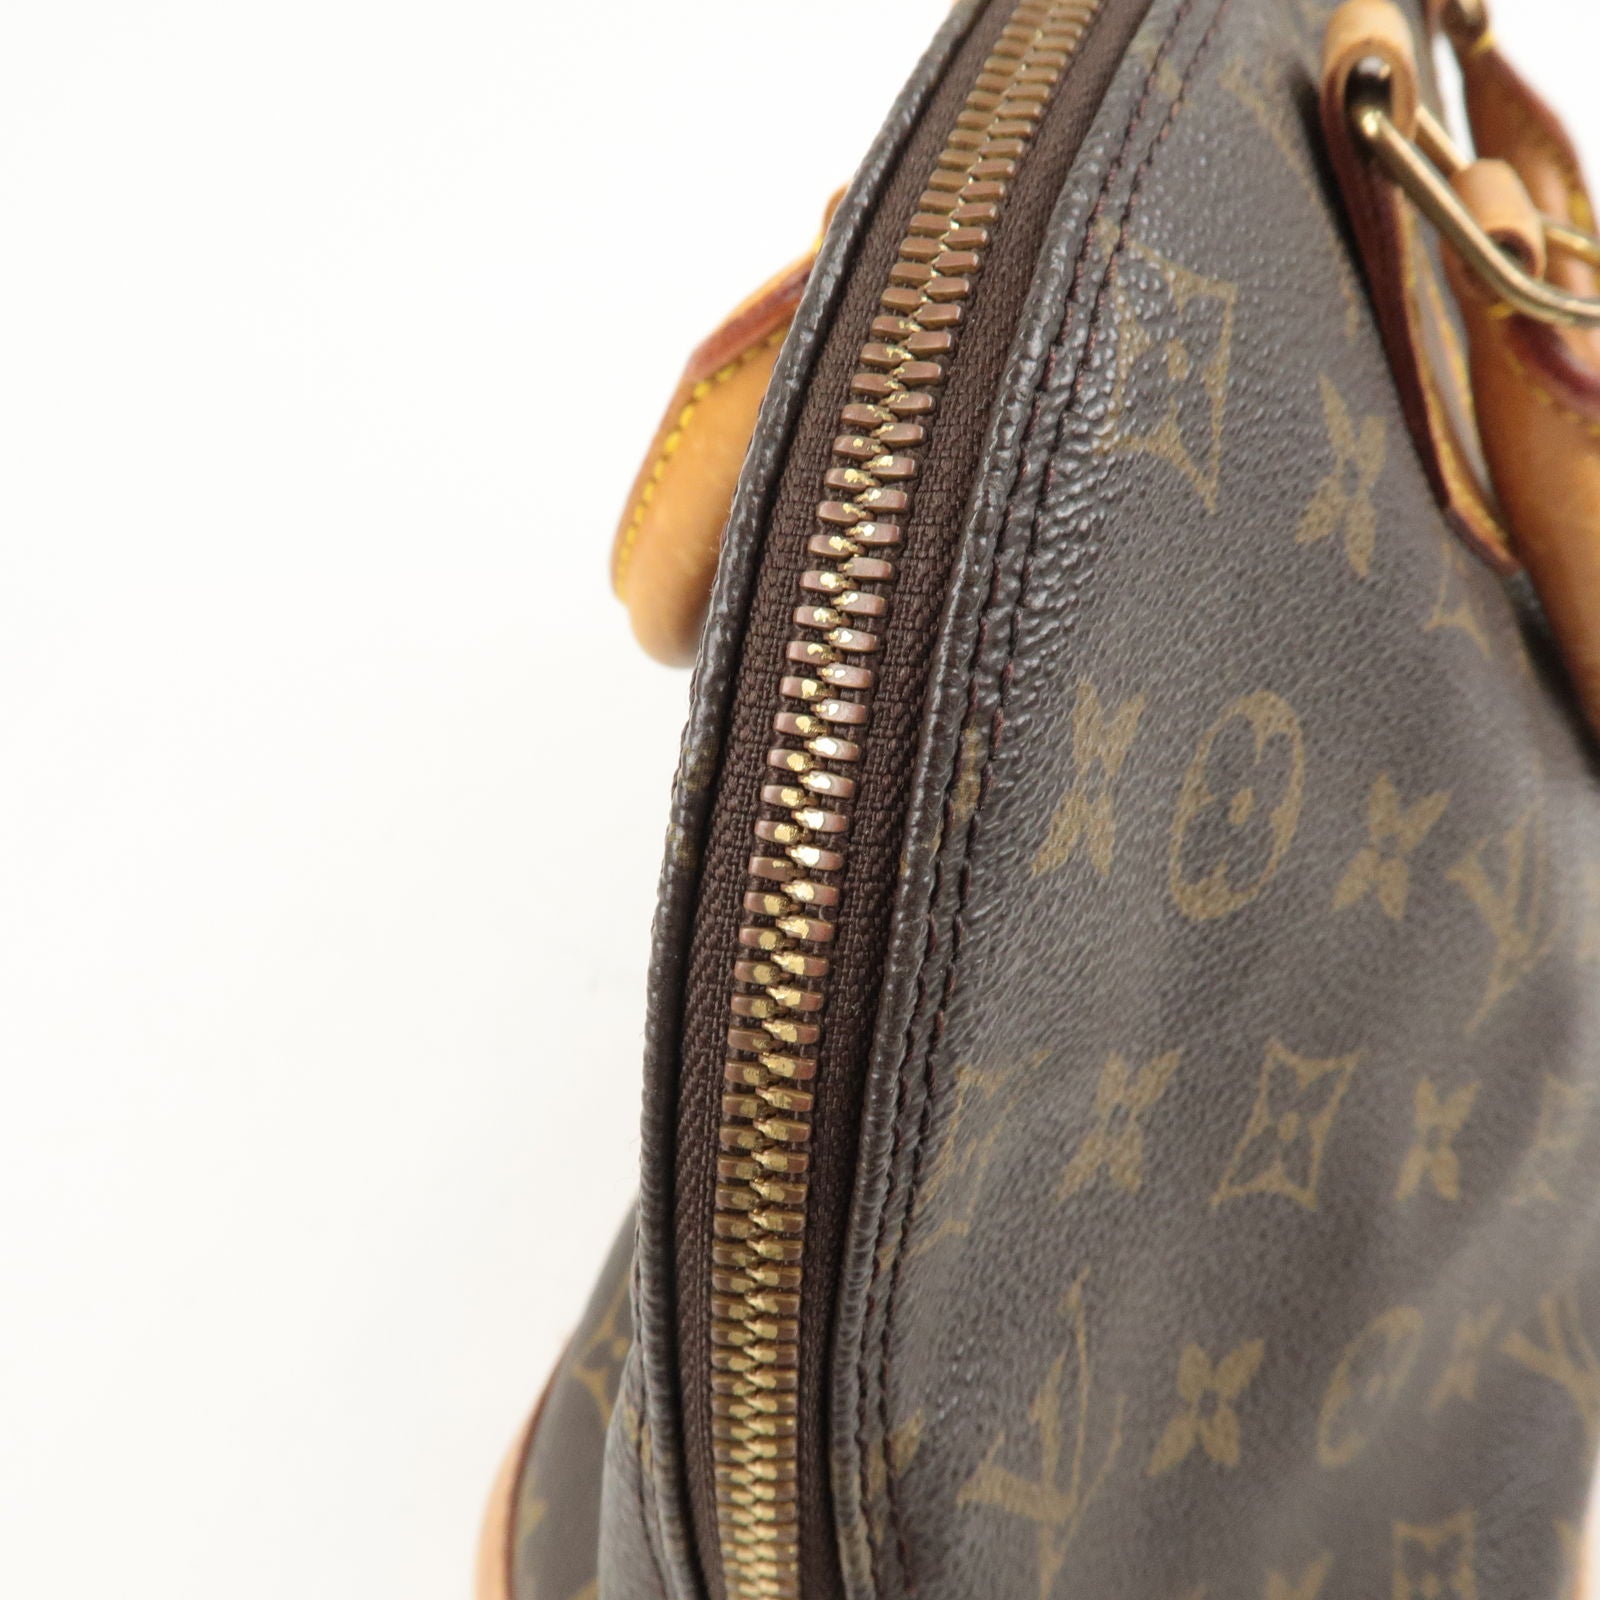 Louis Vuitton City Steamer Small Model Handbag in Black Grained